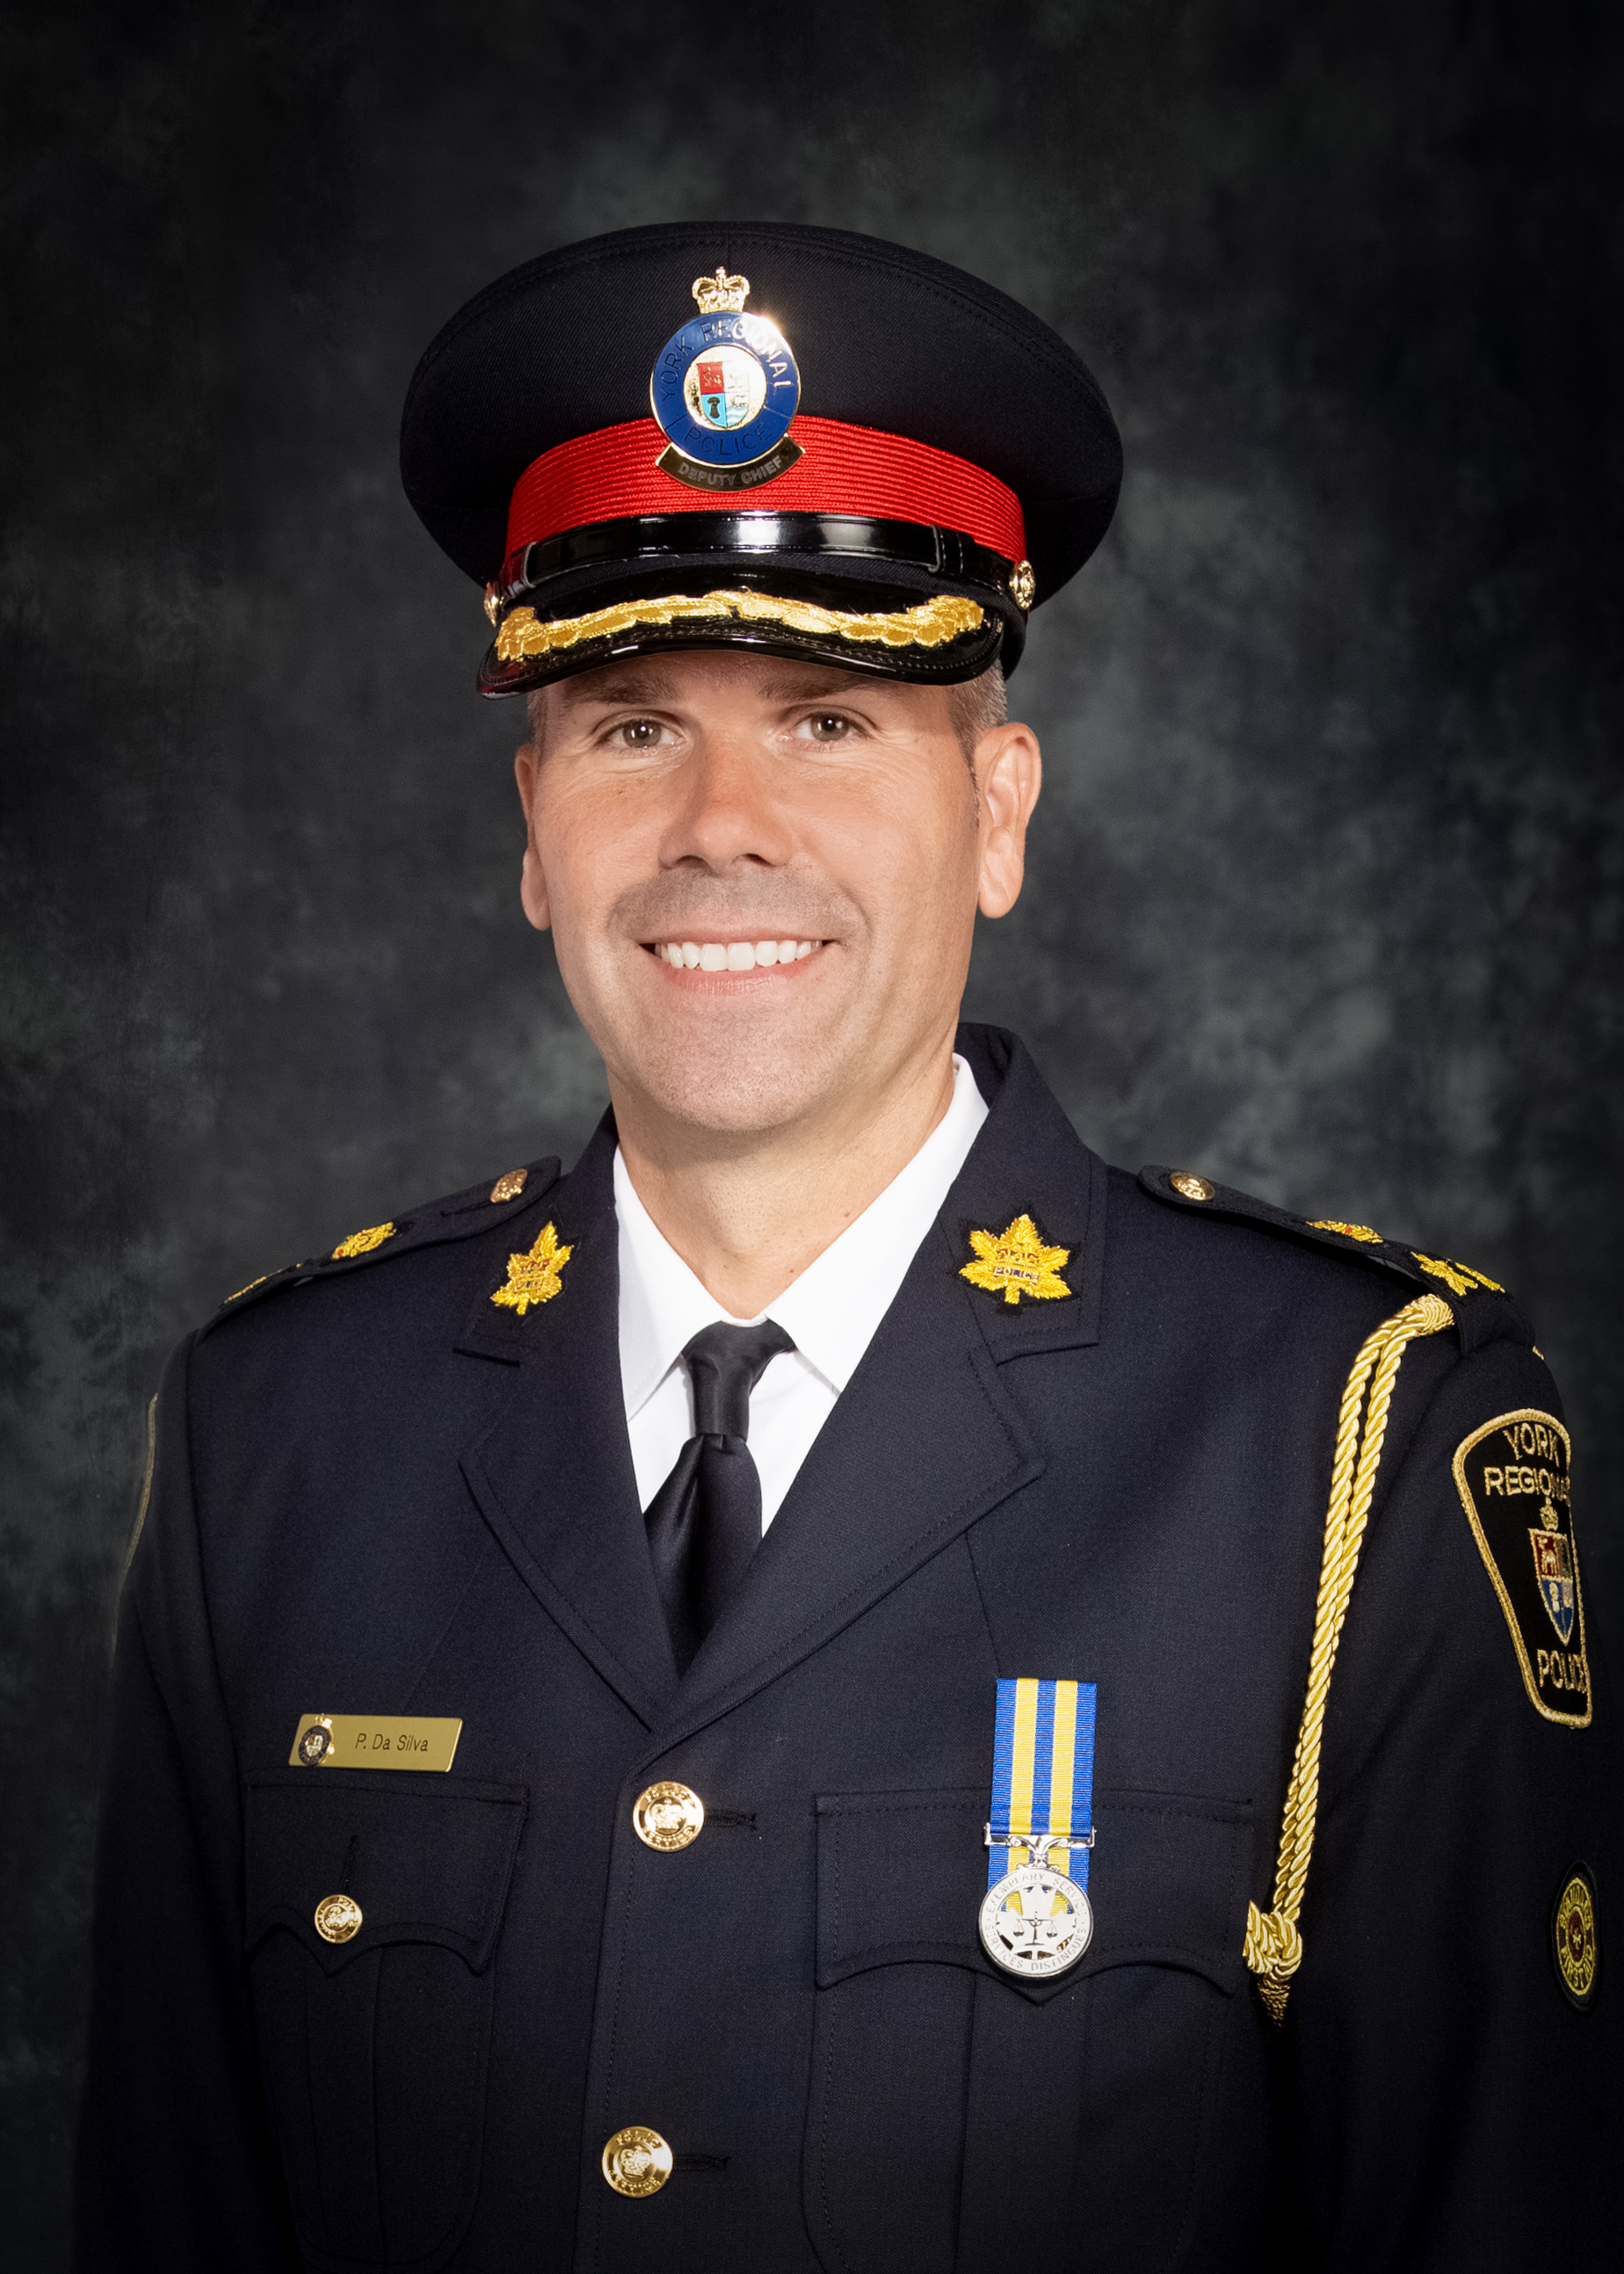 Man smiling wearing a police uniform